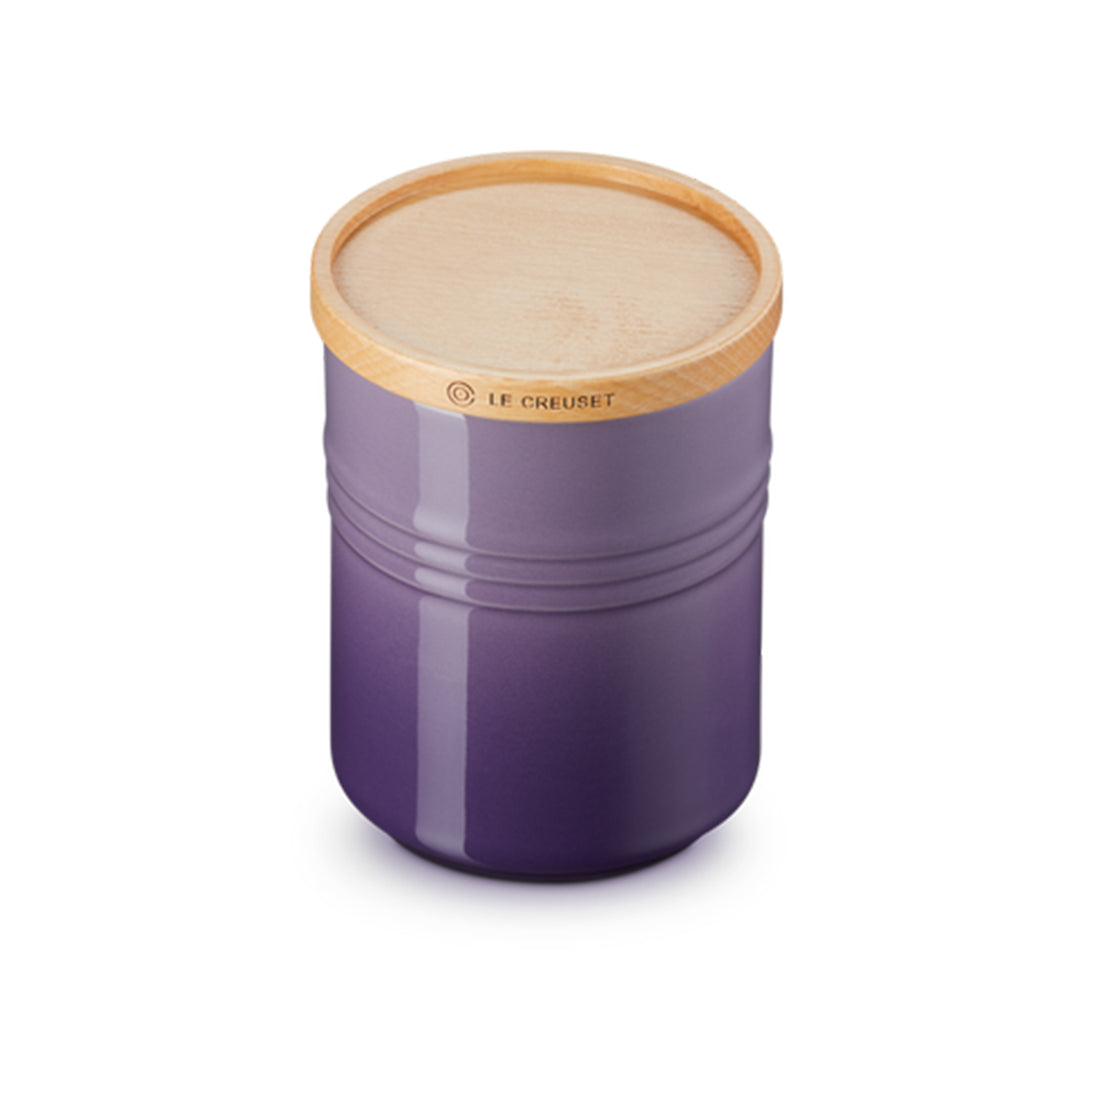 Le Creuset, Le Creuset Stoneware Medium Storage Jar with Wooden Lid - Ultra Violet, Redber Coffee